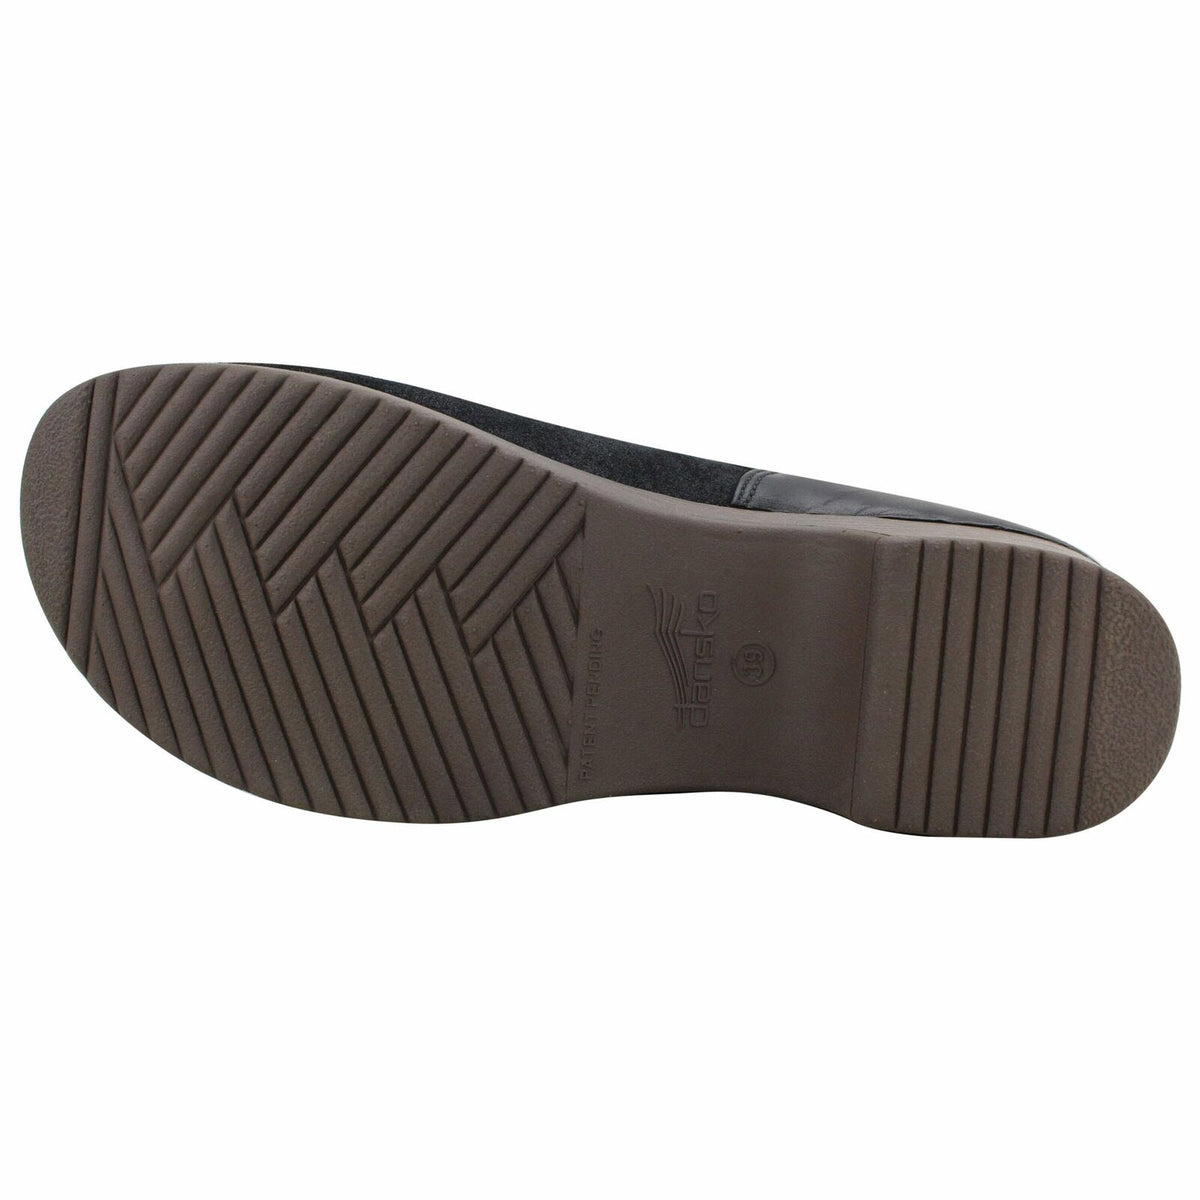 Sole of a brown Dansko Brenna slip-on shoe displaying its tread pattern.